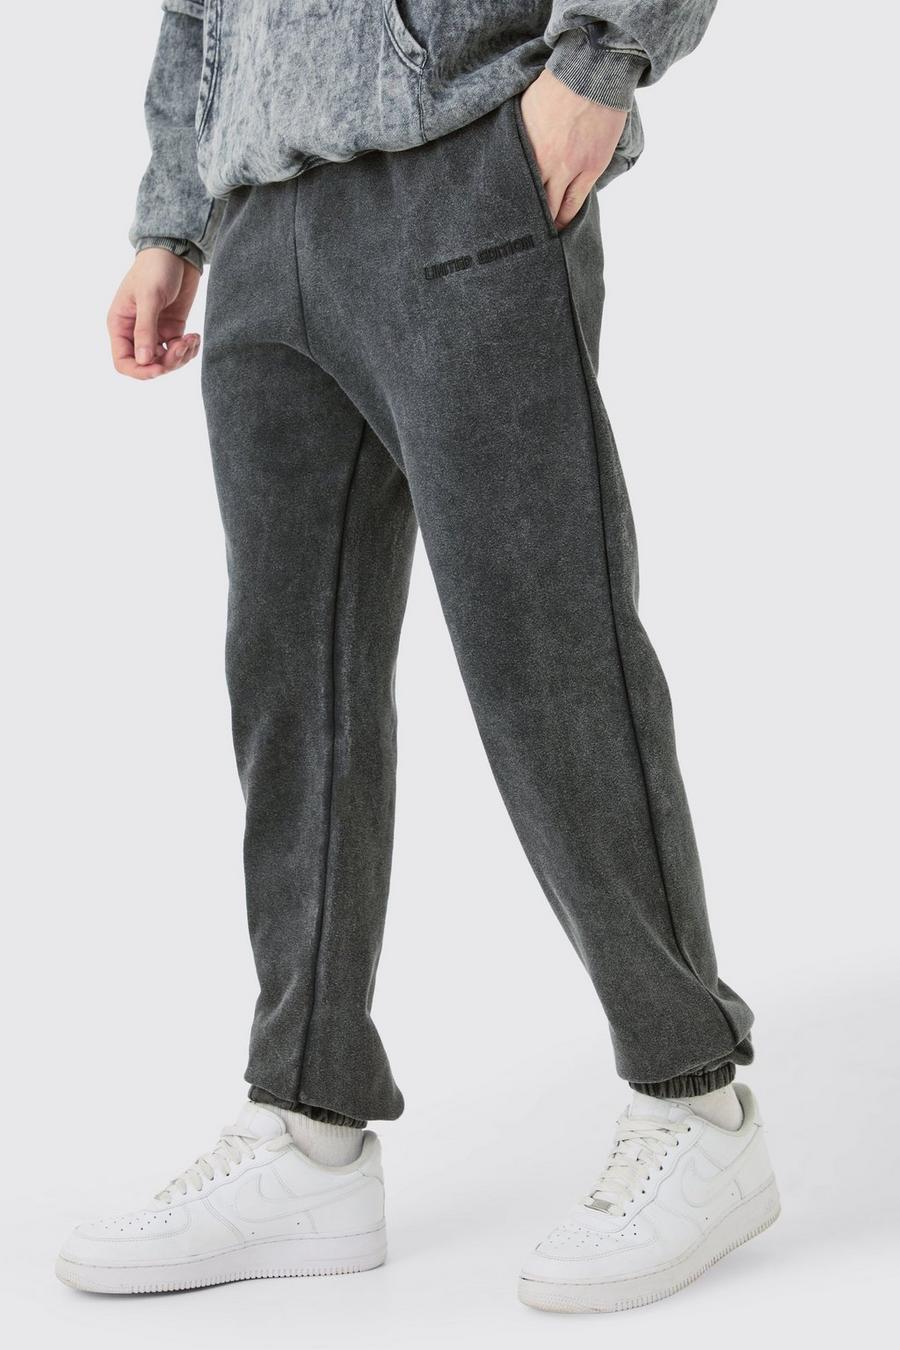 Pantaloni tuta Tall Core Fit Limited in lavaggio riciclato, Charcoal image number 1